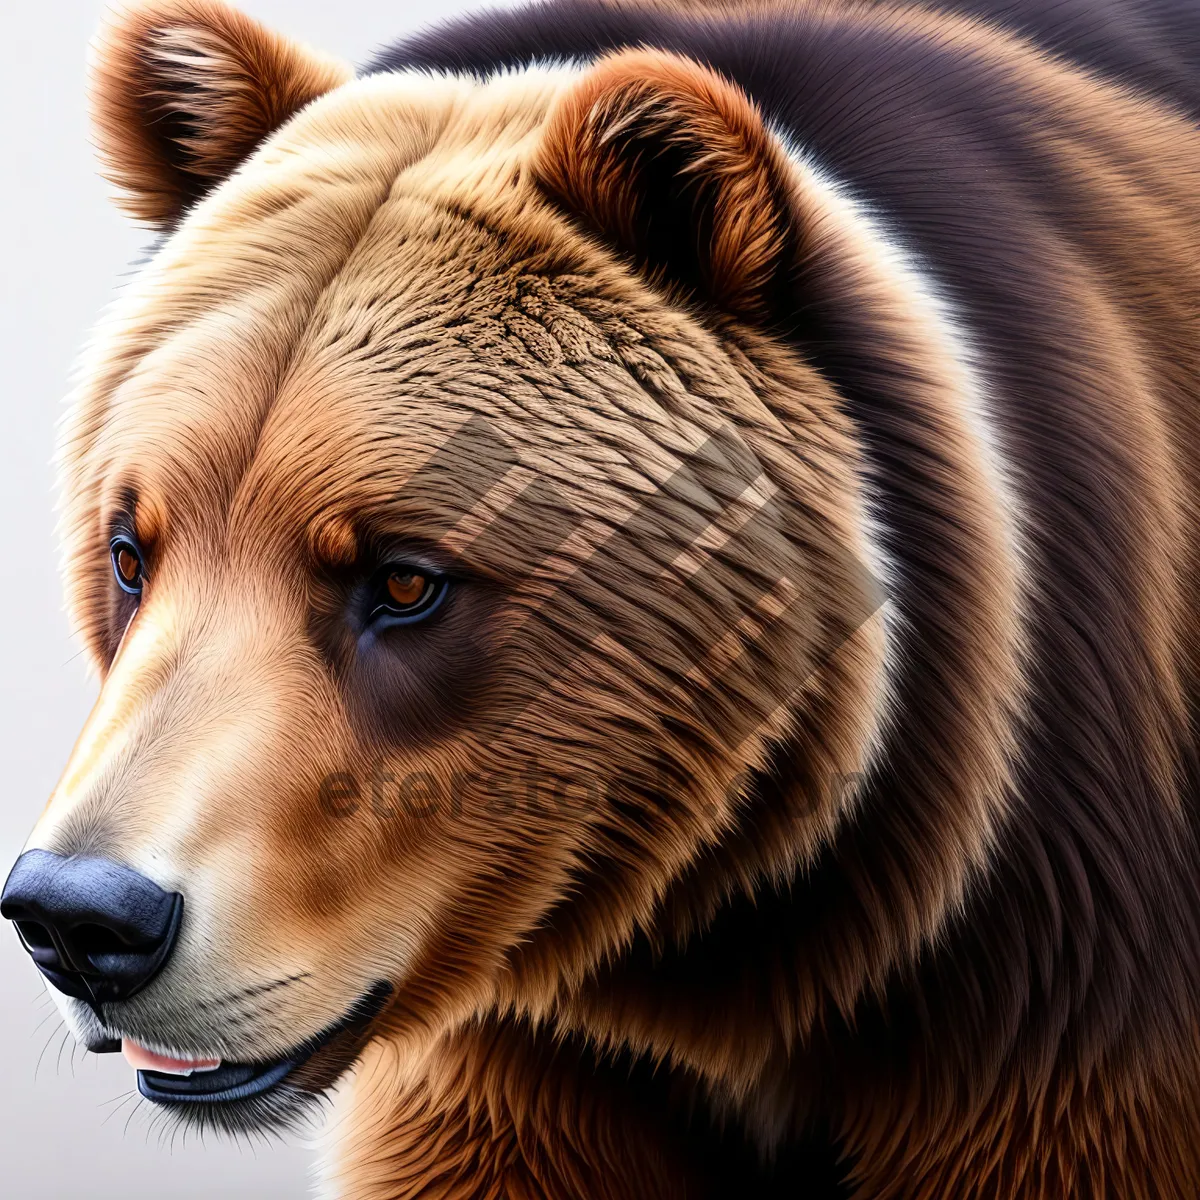 Picture of Cute Brown Bear in Wild Habitat